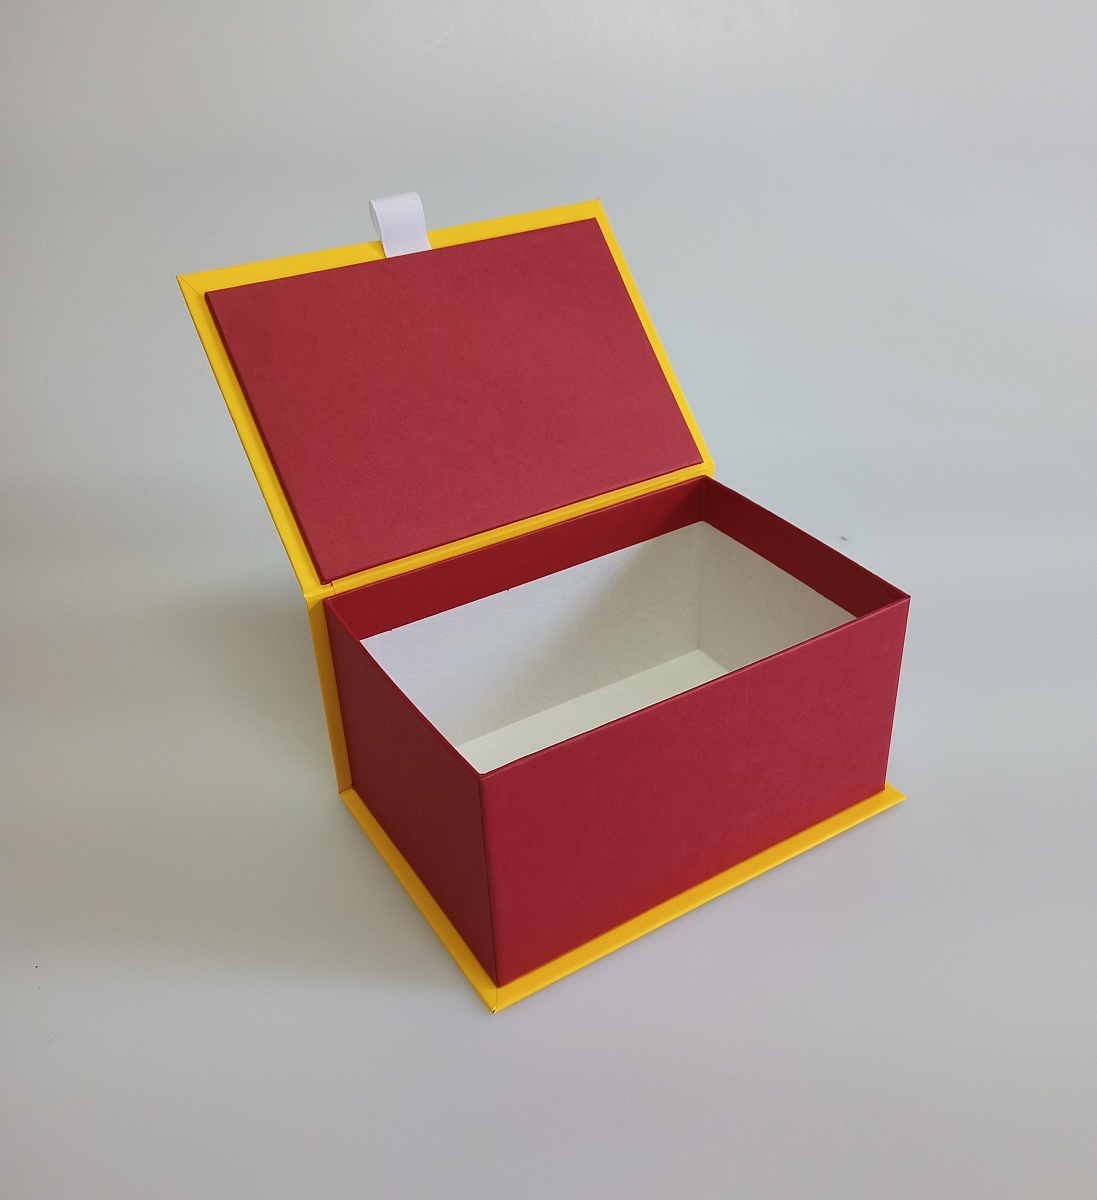 Коробка-книжка для хранения, 18.6 x 12.8 x 9.6 см.  "Мандалы", желтый, красный